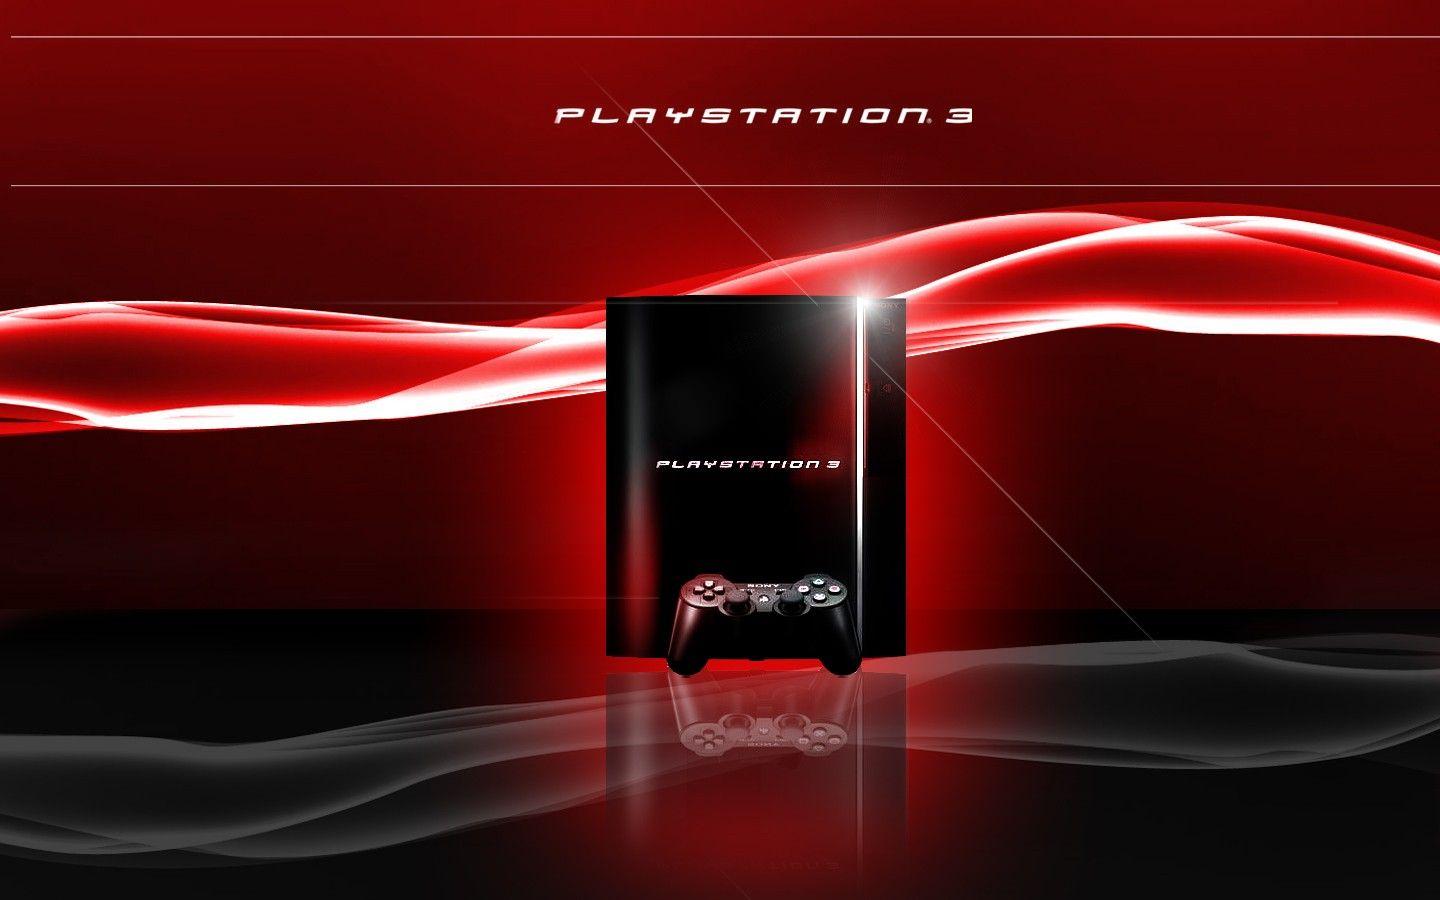 Playstation 3 HD Wallpaper 20 X 900